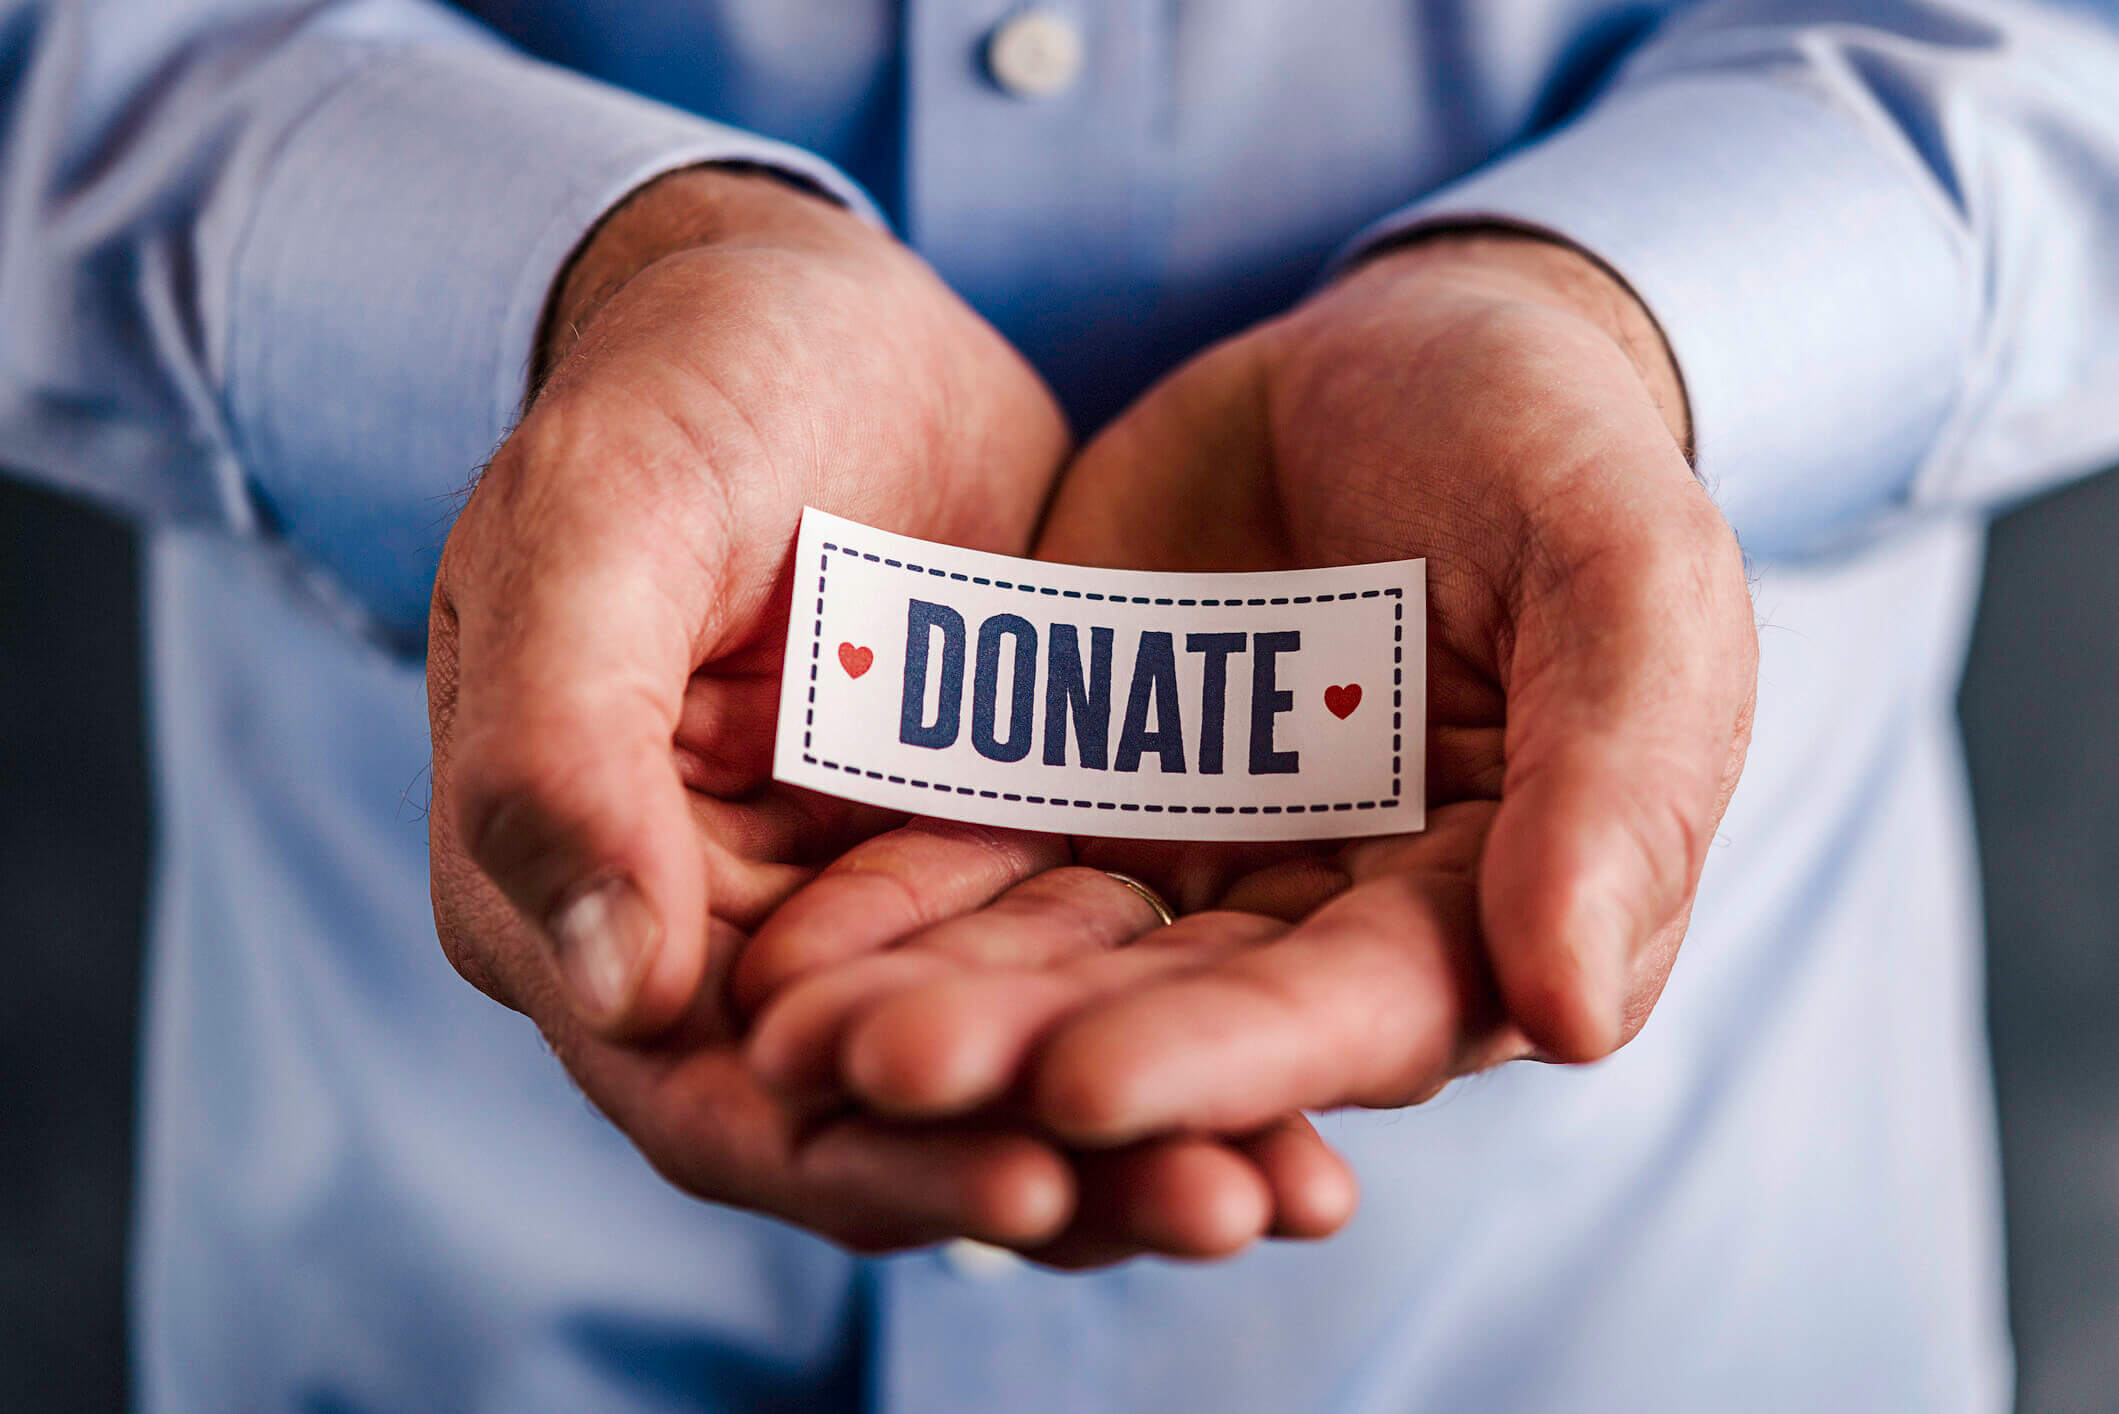 Charitable Donation